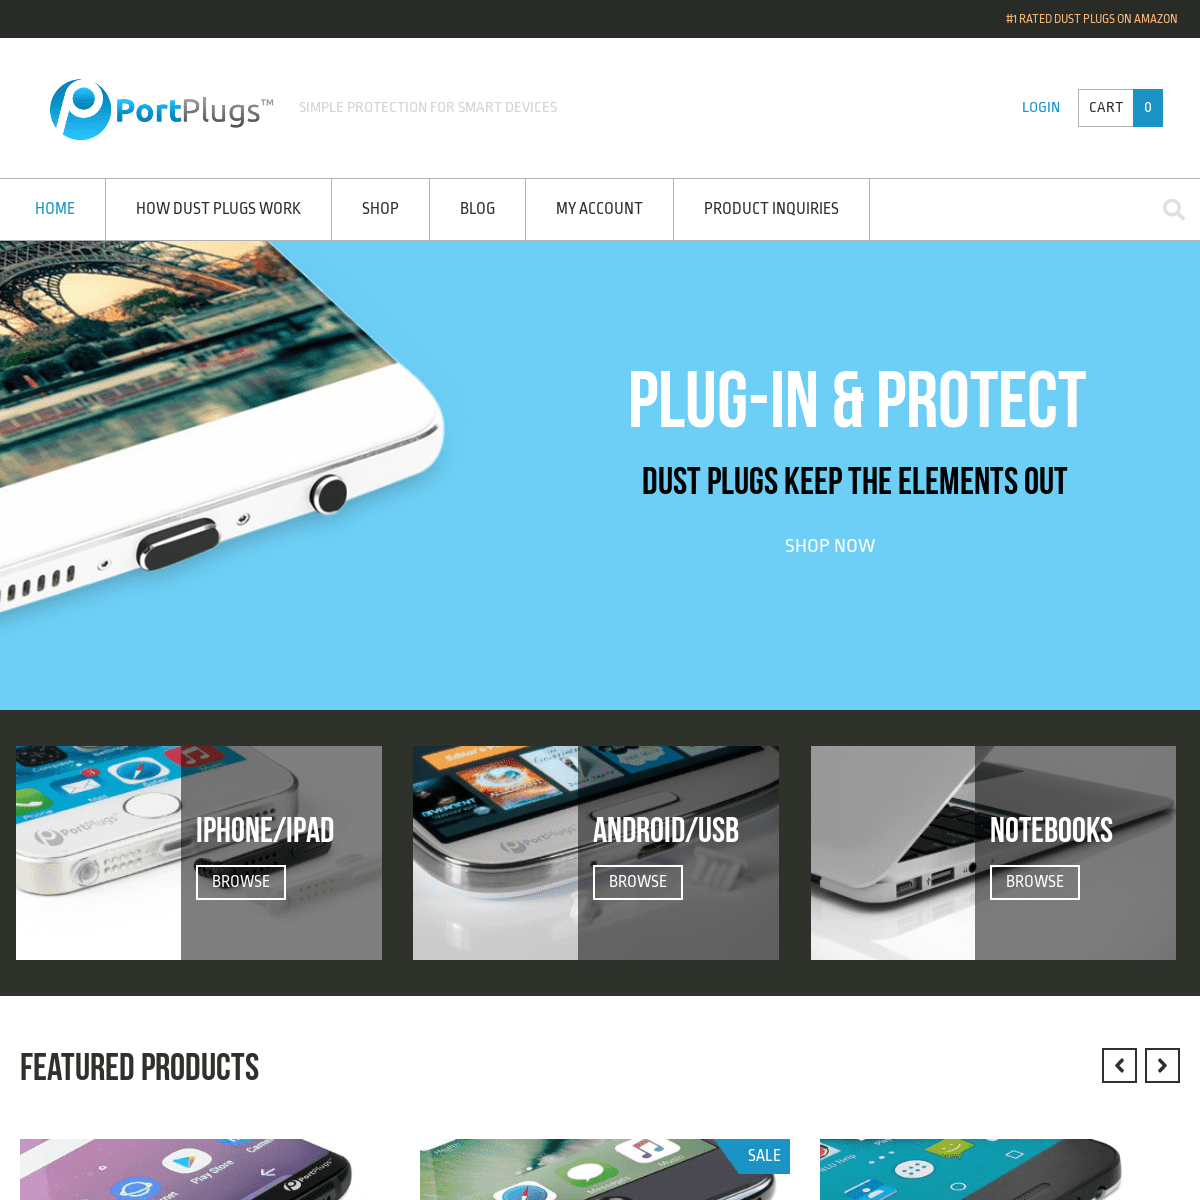 A complete backup of portplugs.com